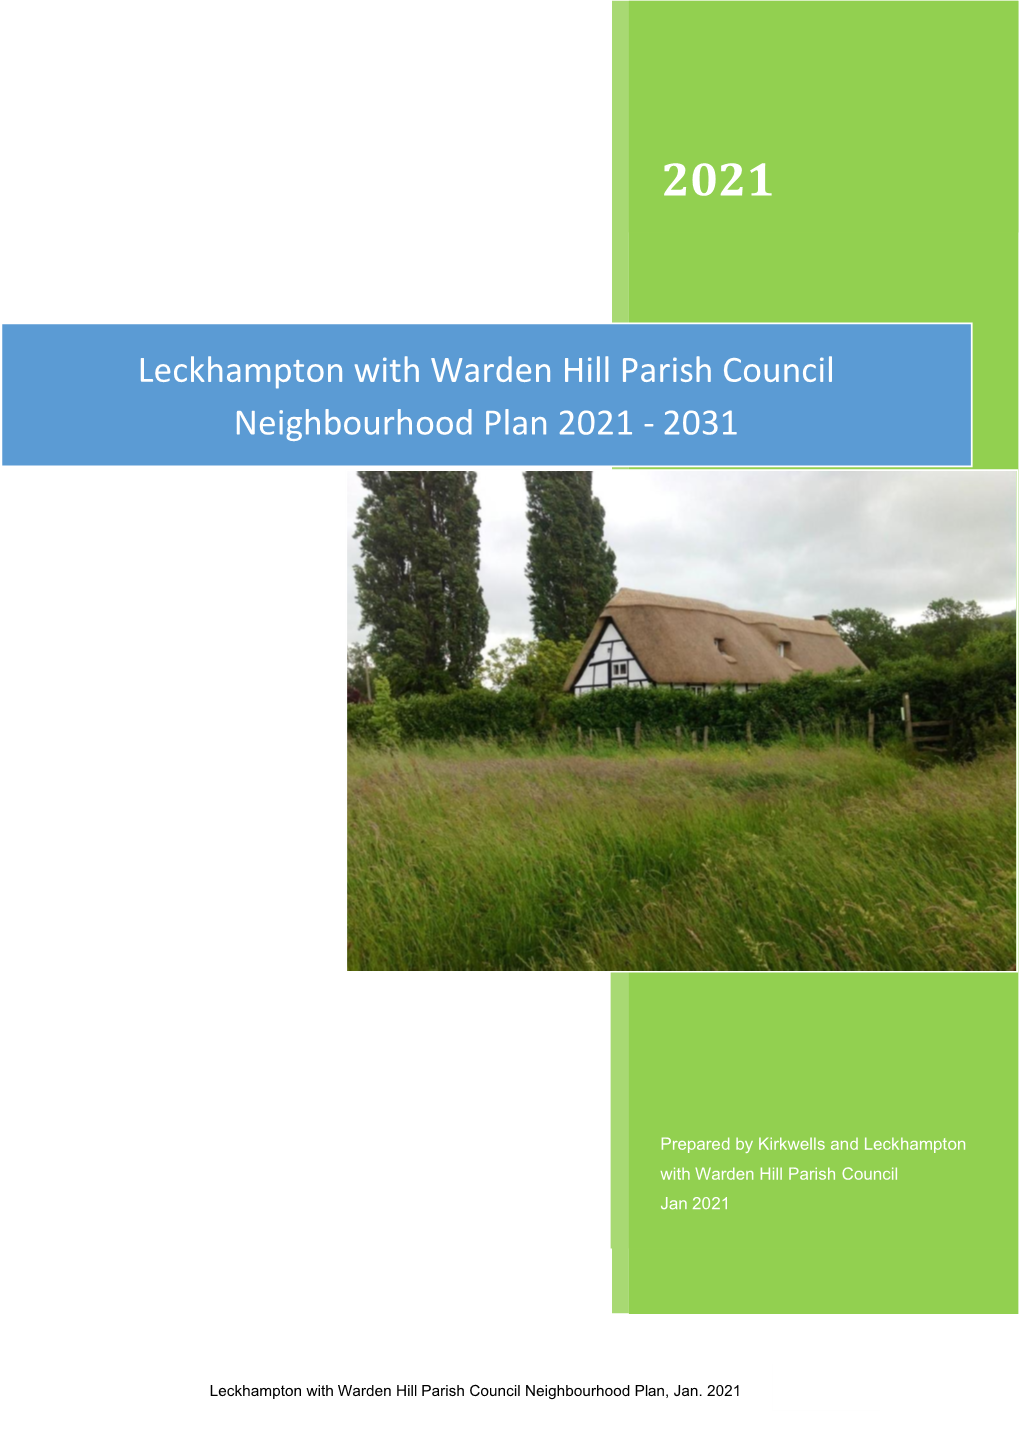 Leckhampton with Warden Hill Parish Council Neighbourhood Plan 2021 - 2031